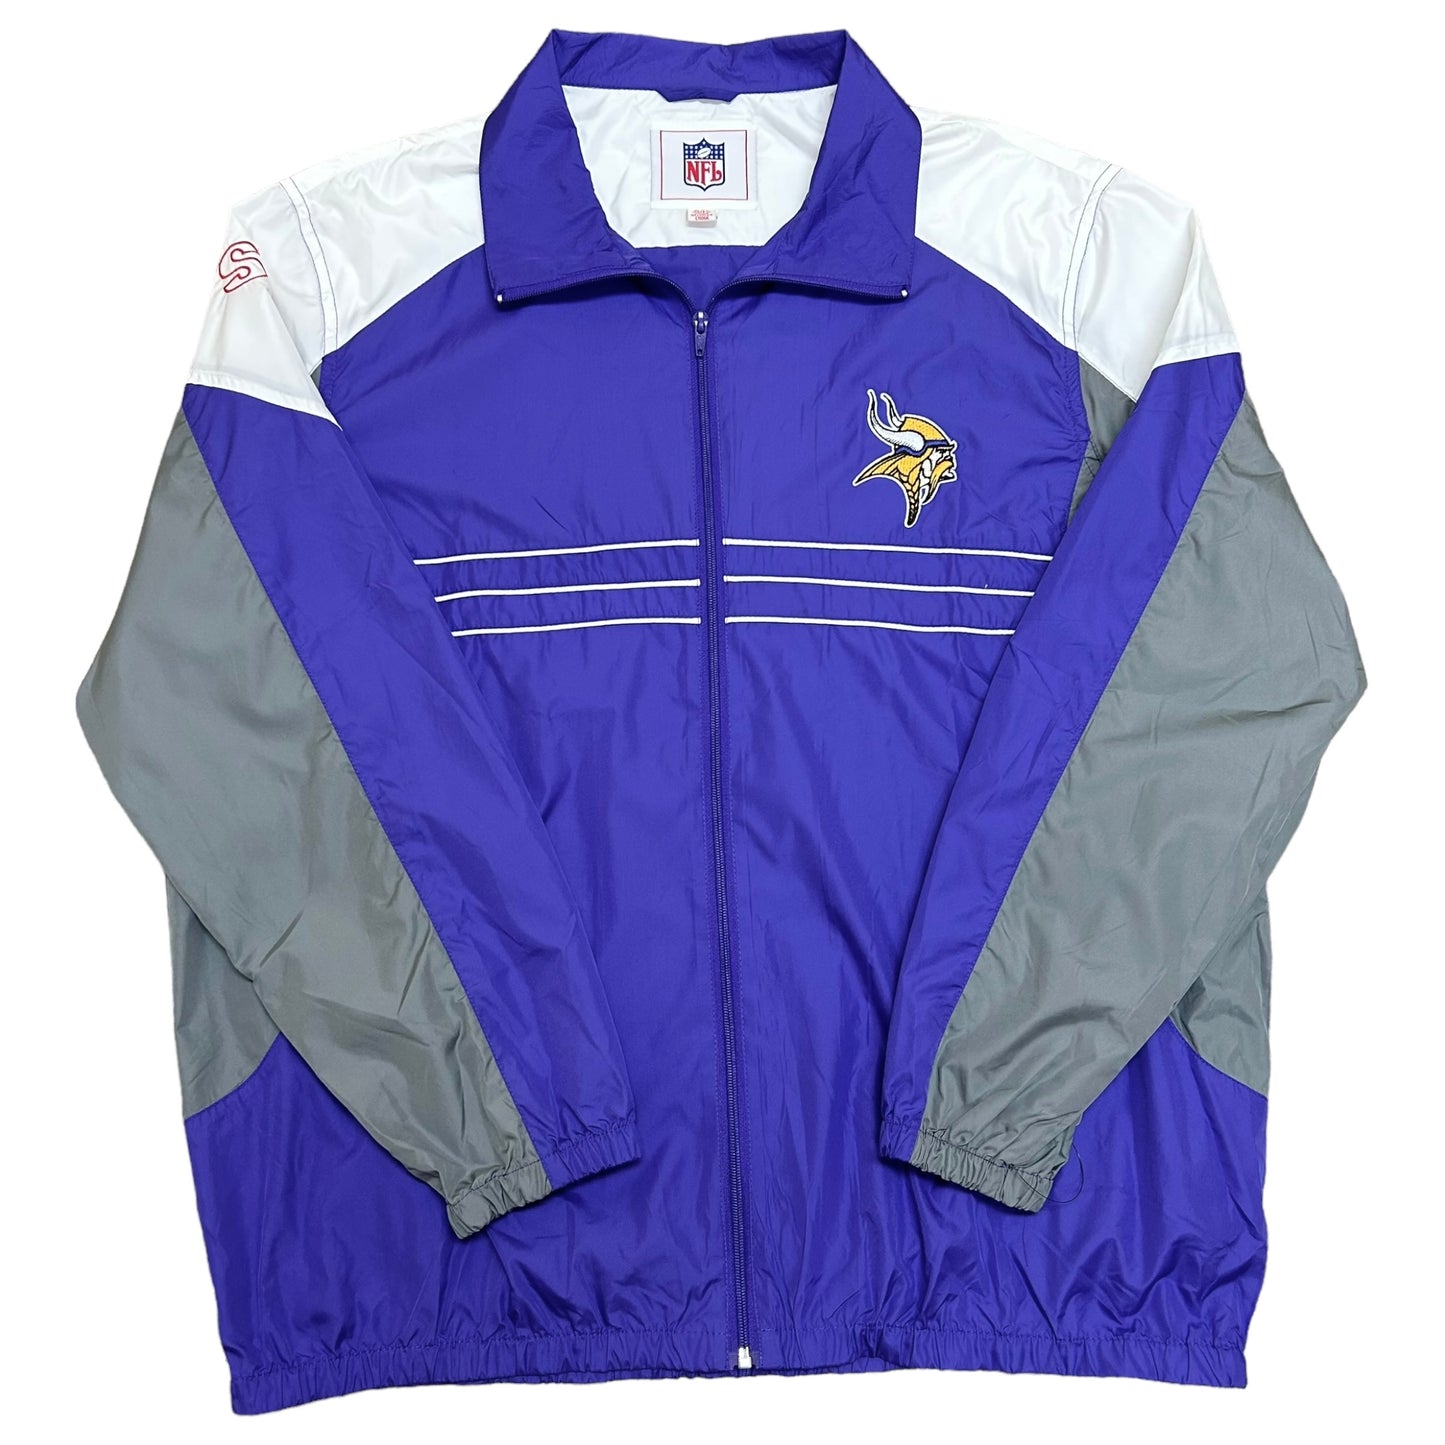 NWOT Late 2000s NFL Team Apparel Minnesota Vikings Purple Windbreaker Jacket - Size XL